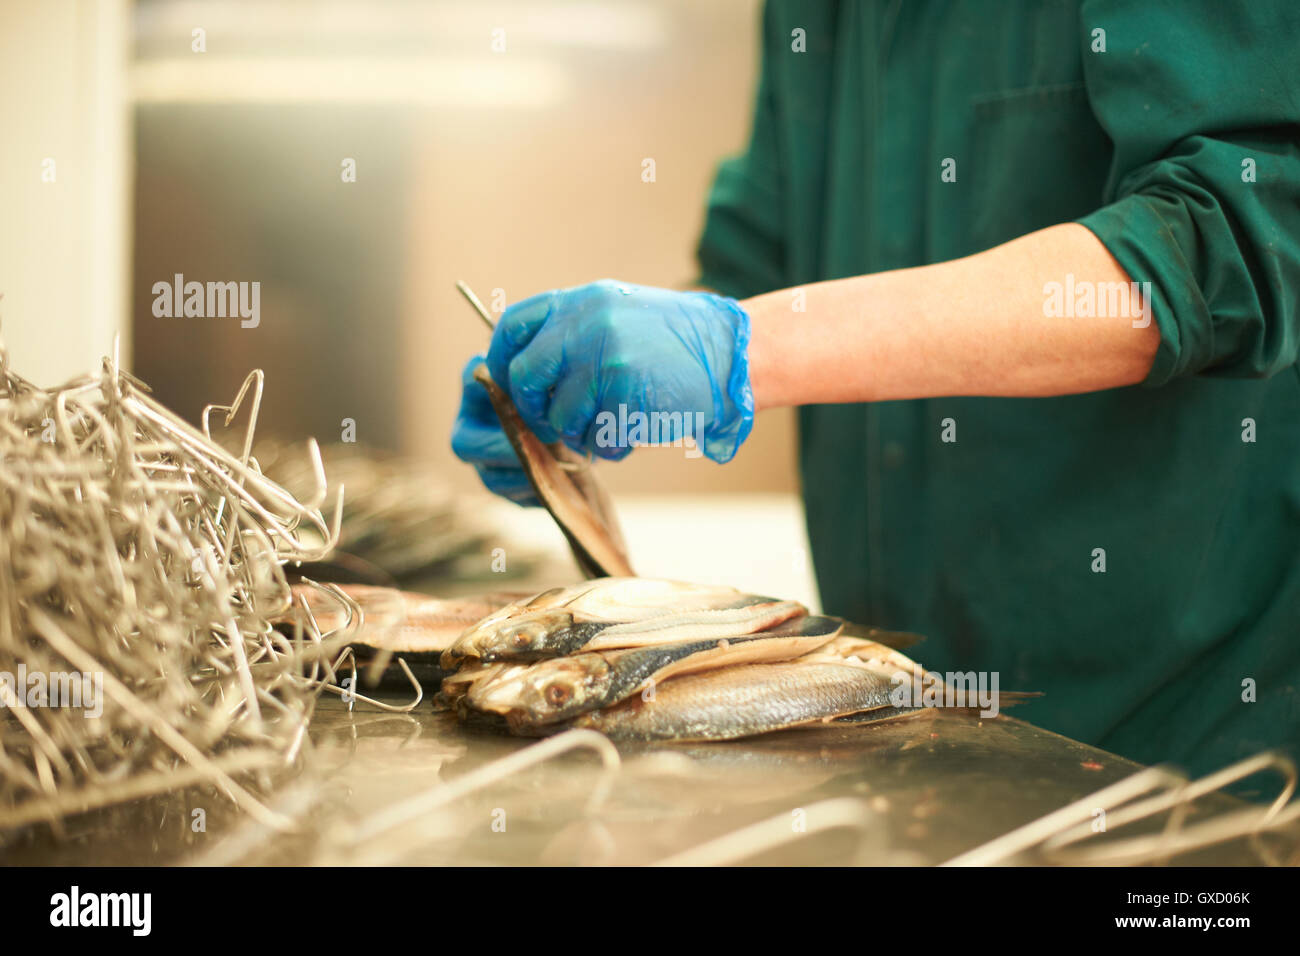 Uomo in Affumicatoio pesce sfilettatura Foto Stock